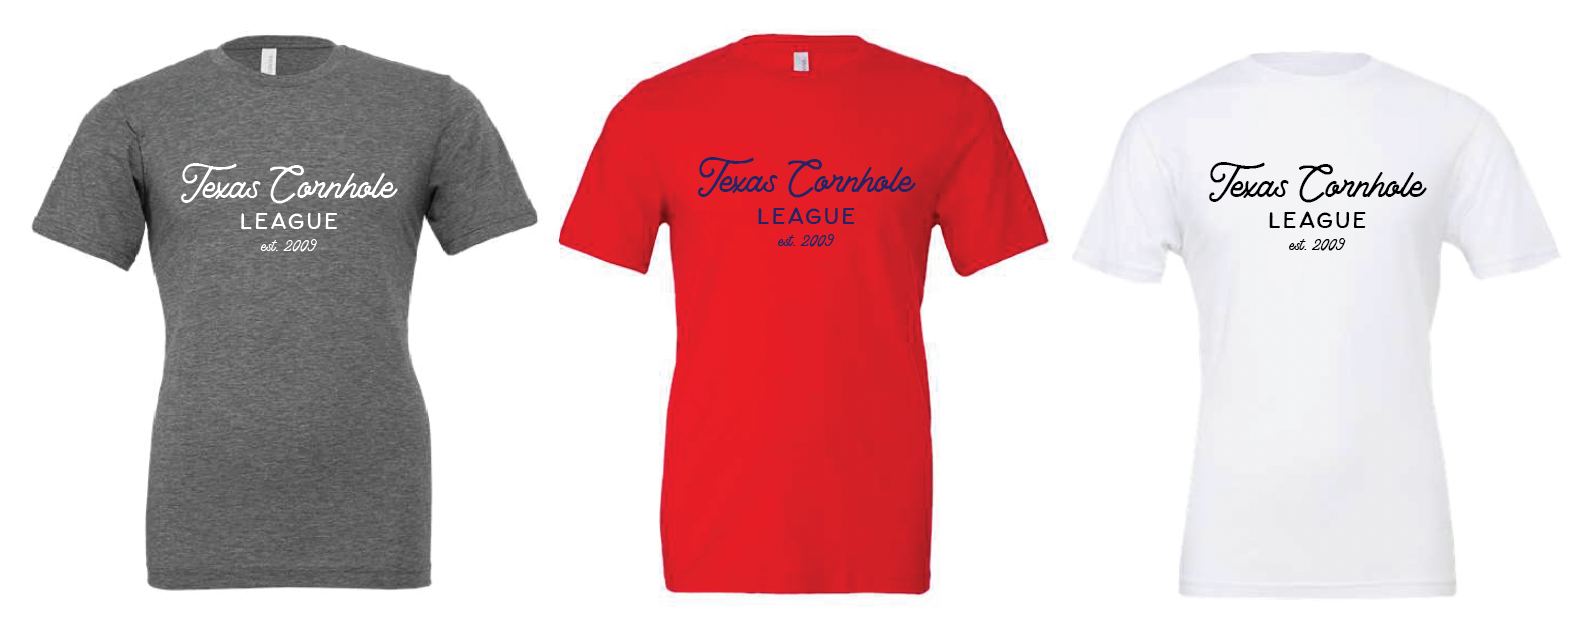 Texas Cornhole League T-shirt